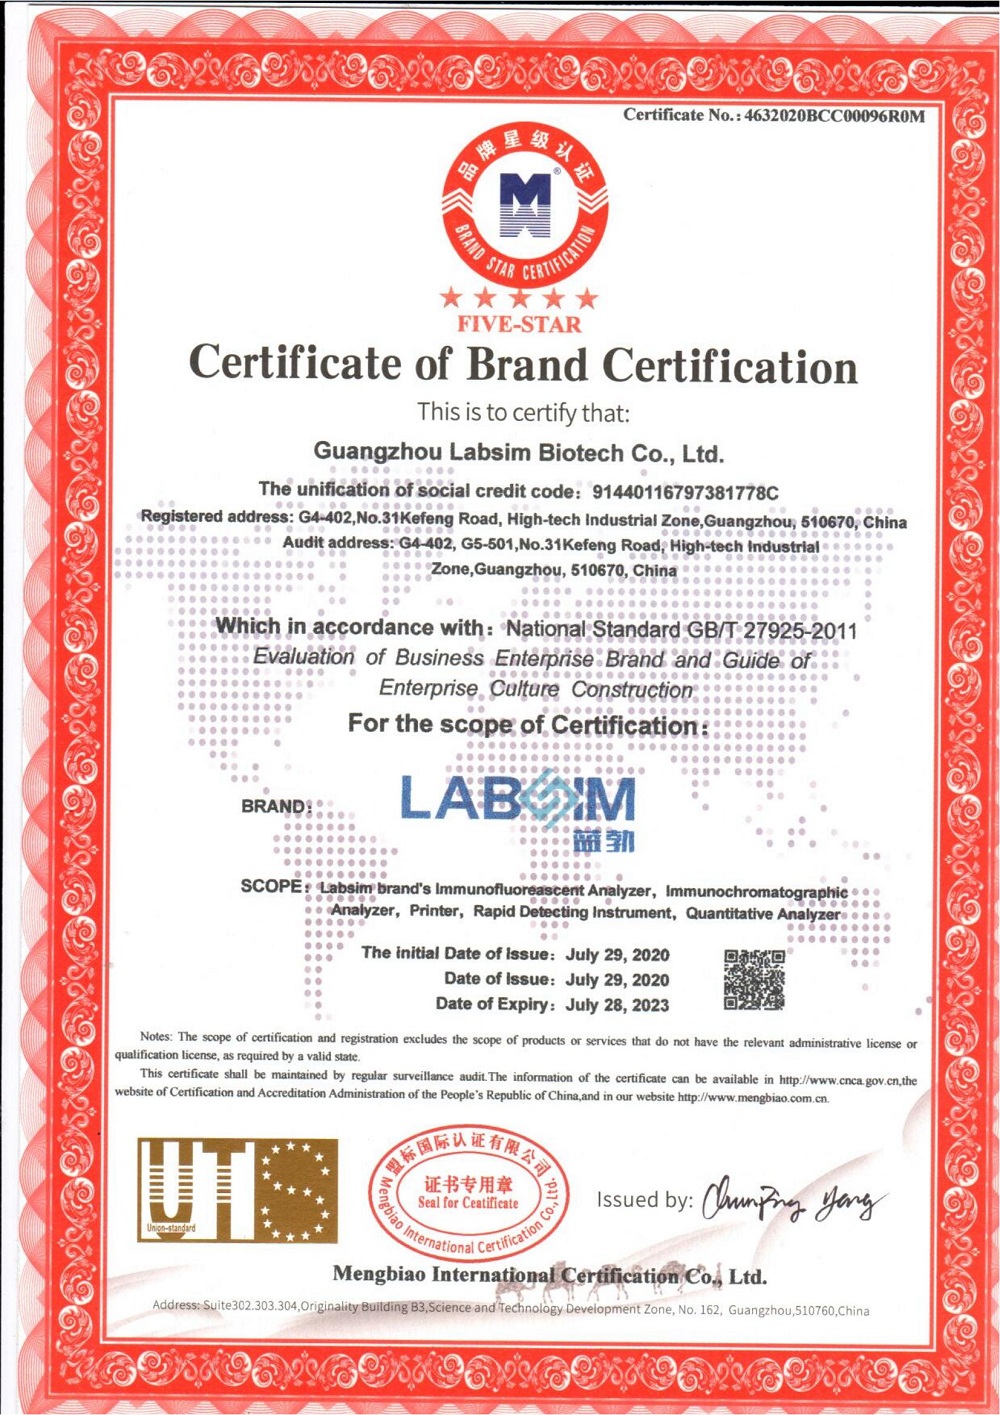 4.16-2, brand certification EN (5 stars)